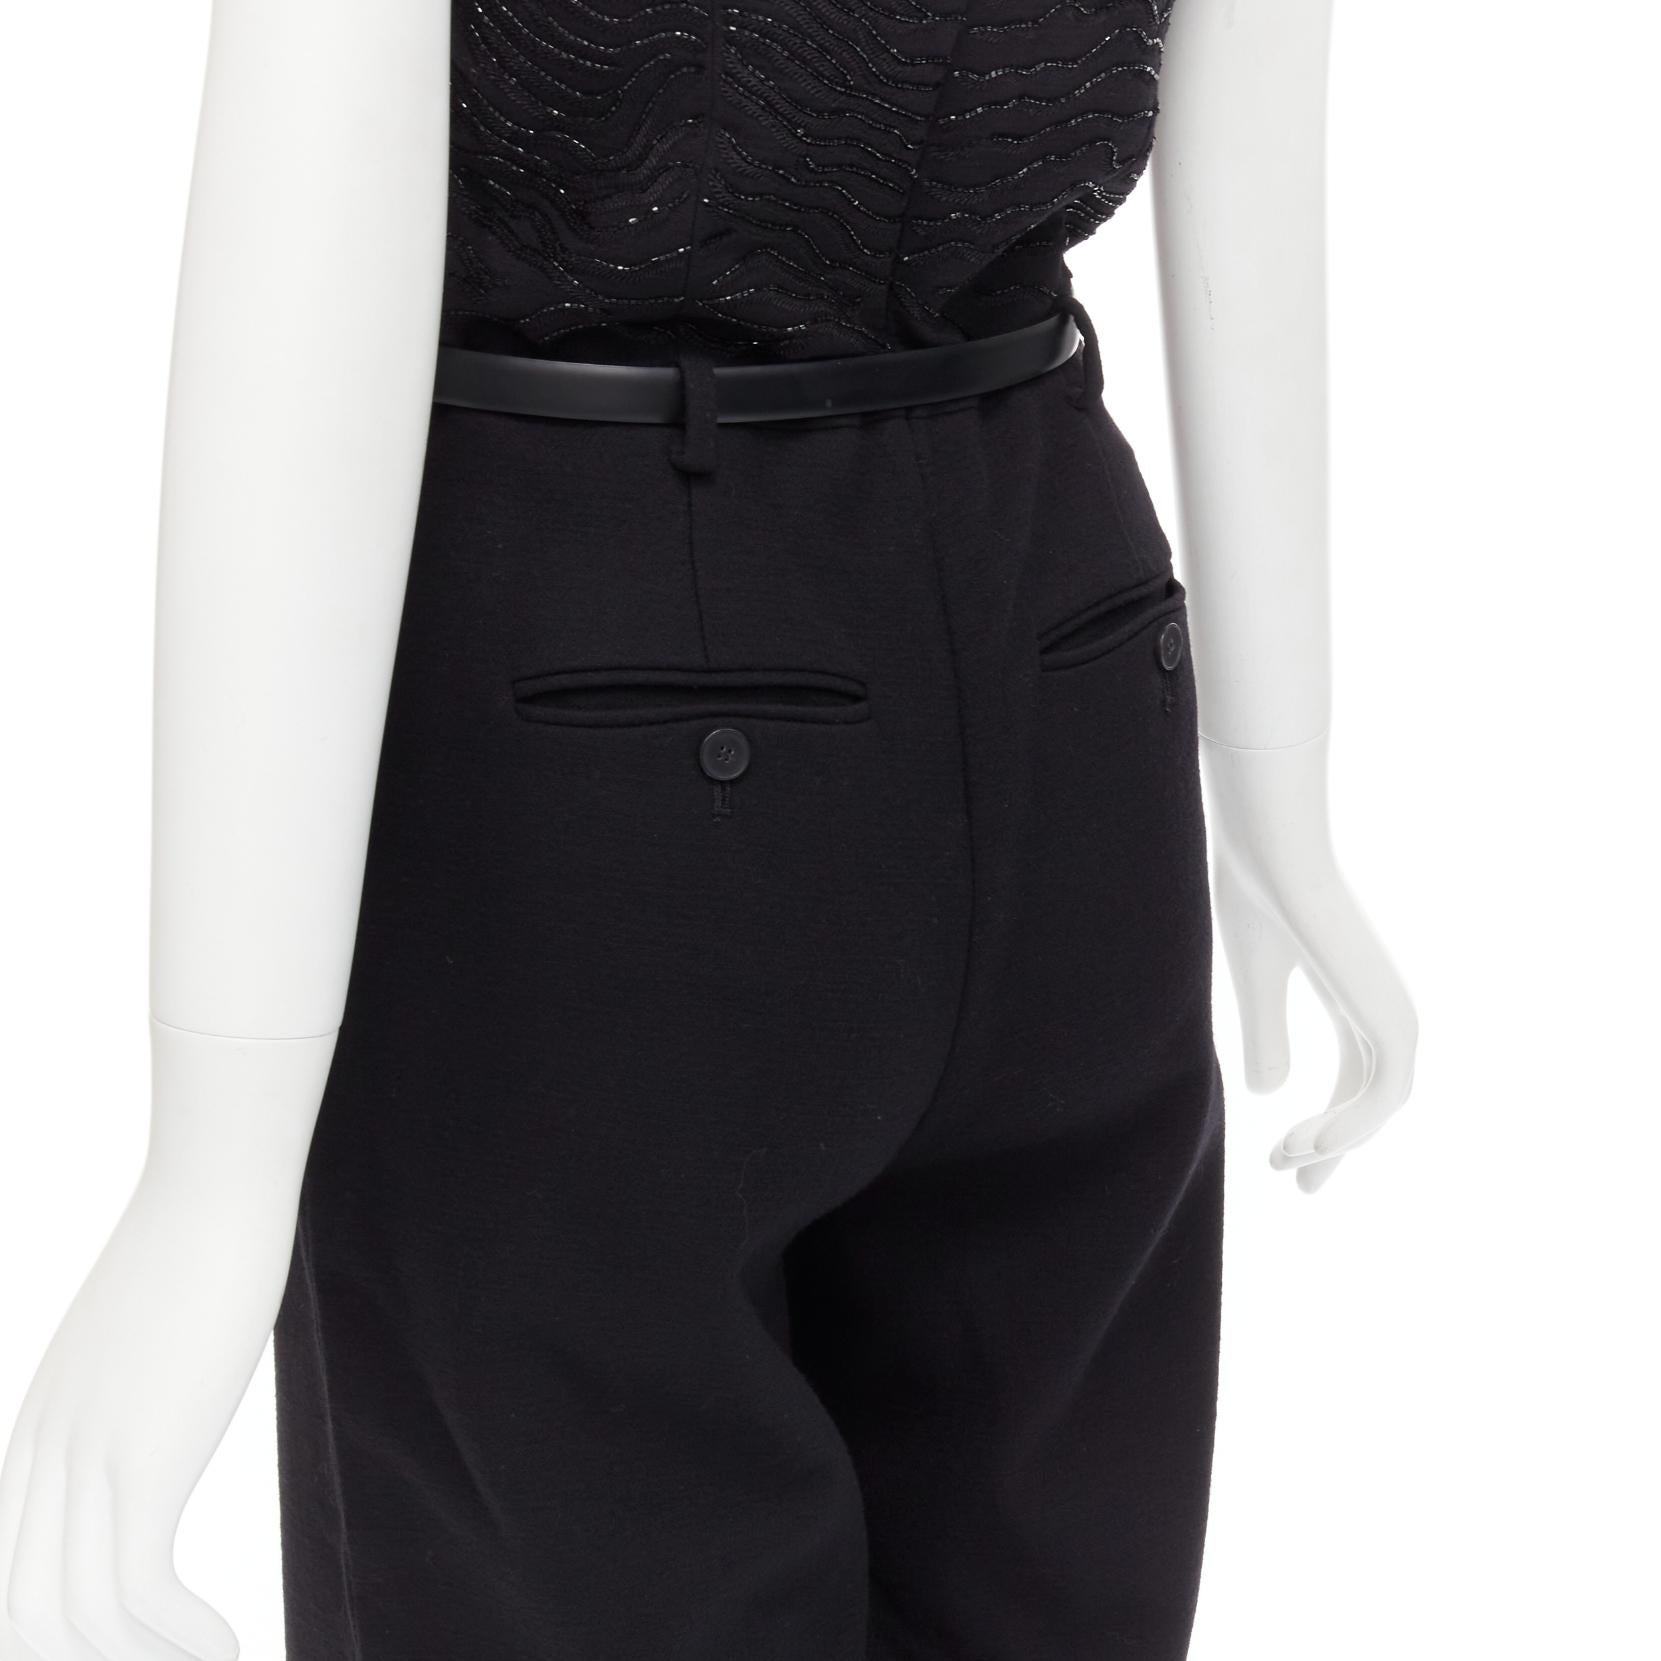 JASON WU 2014 Runway black bead embellished boned corset belted jumpsuit US2 XS For Sale 2